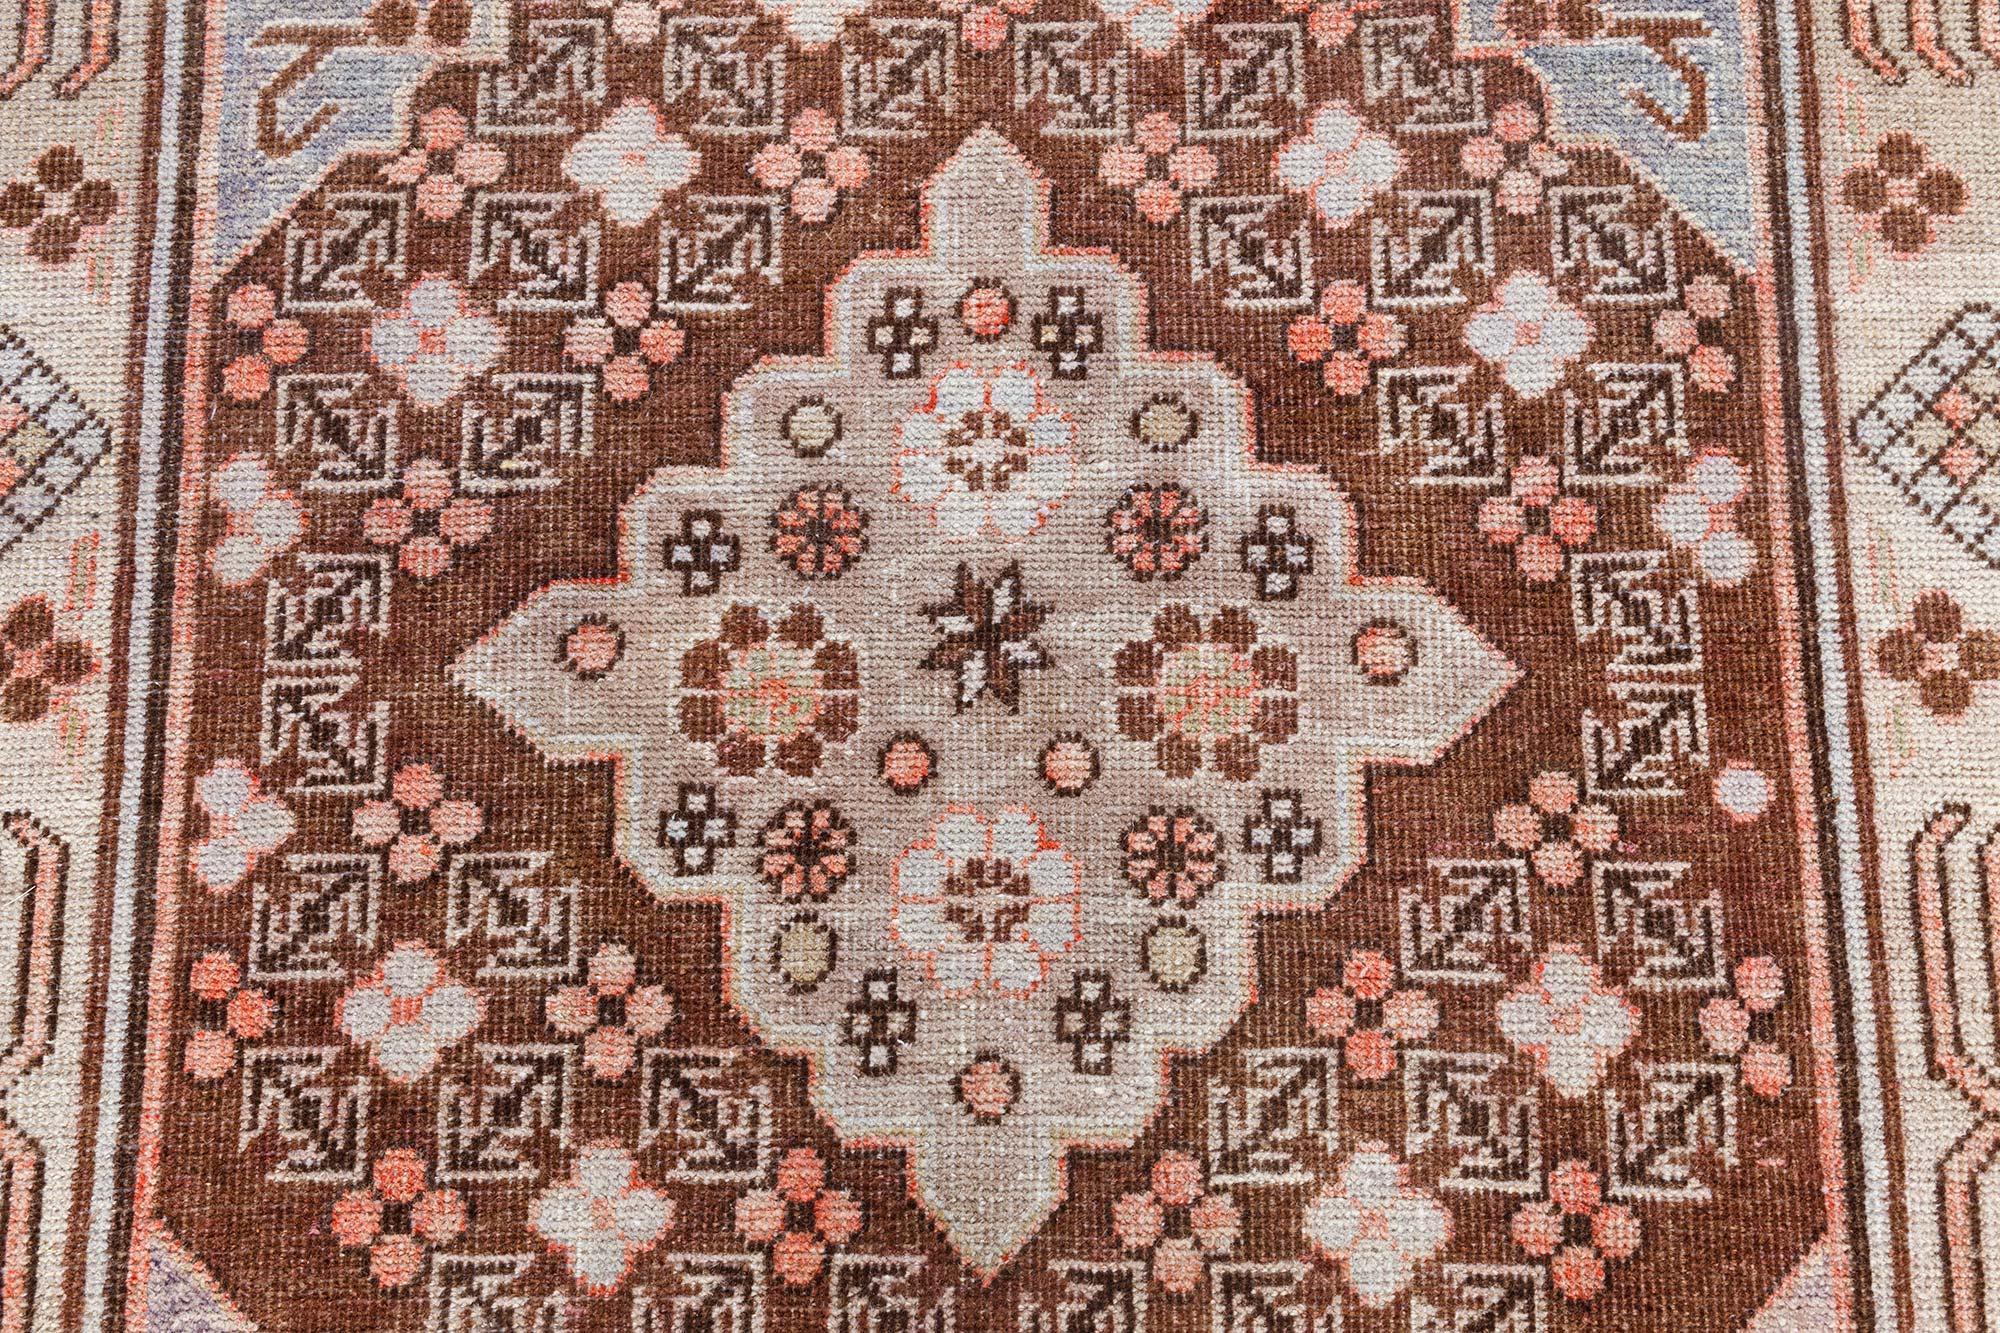 Mid-20th century Samarkand gray, beige, purple, pink handmade wool rug.
Size: 4'2